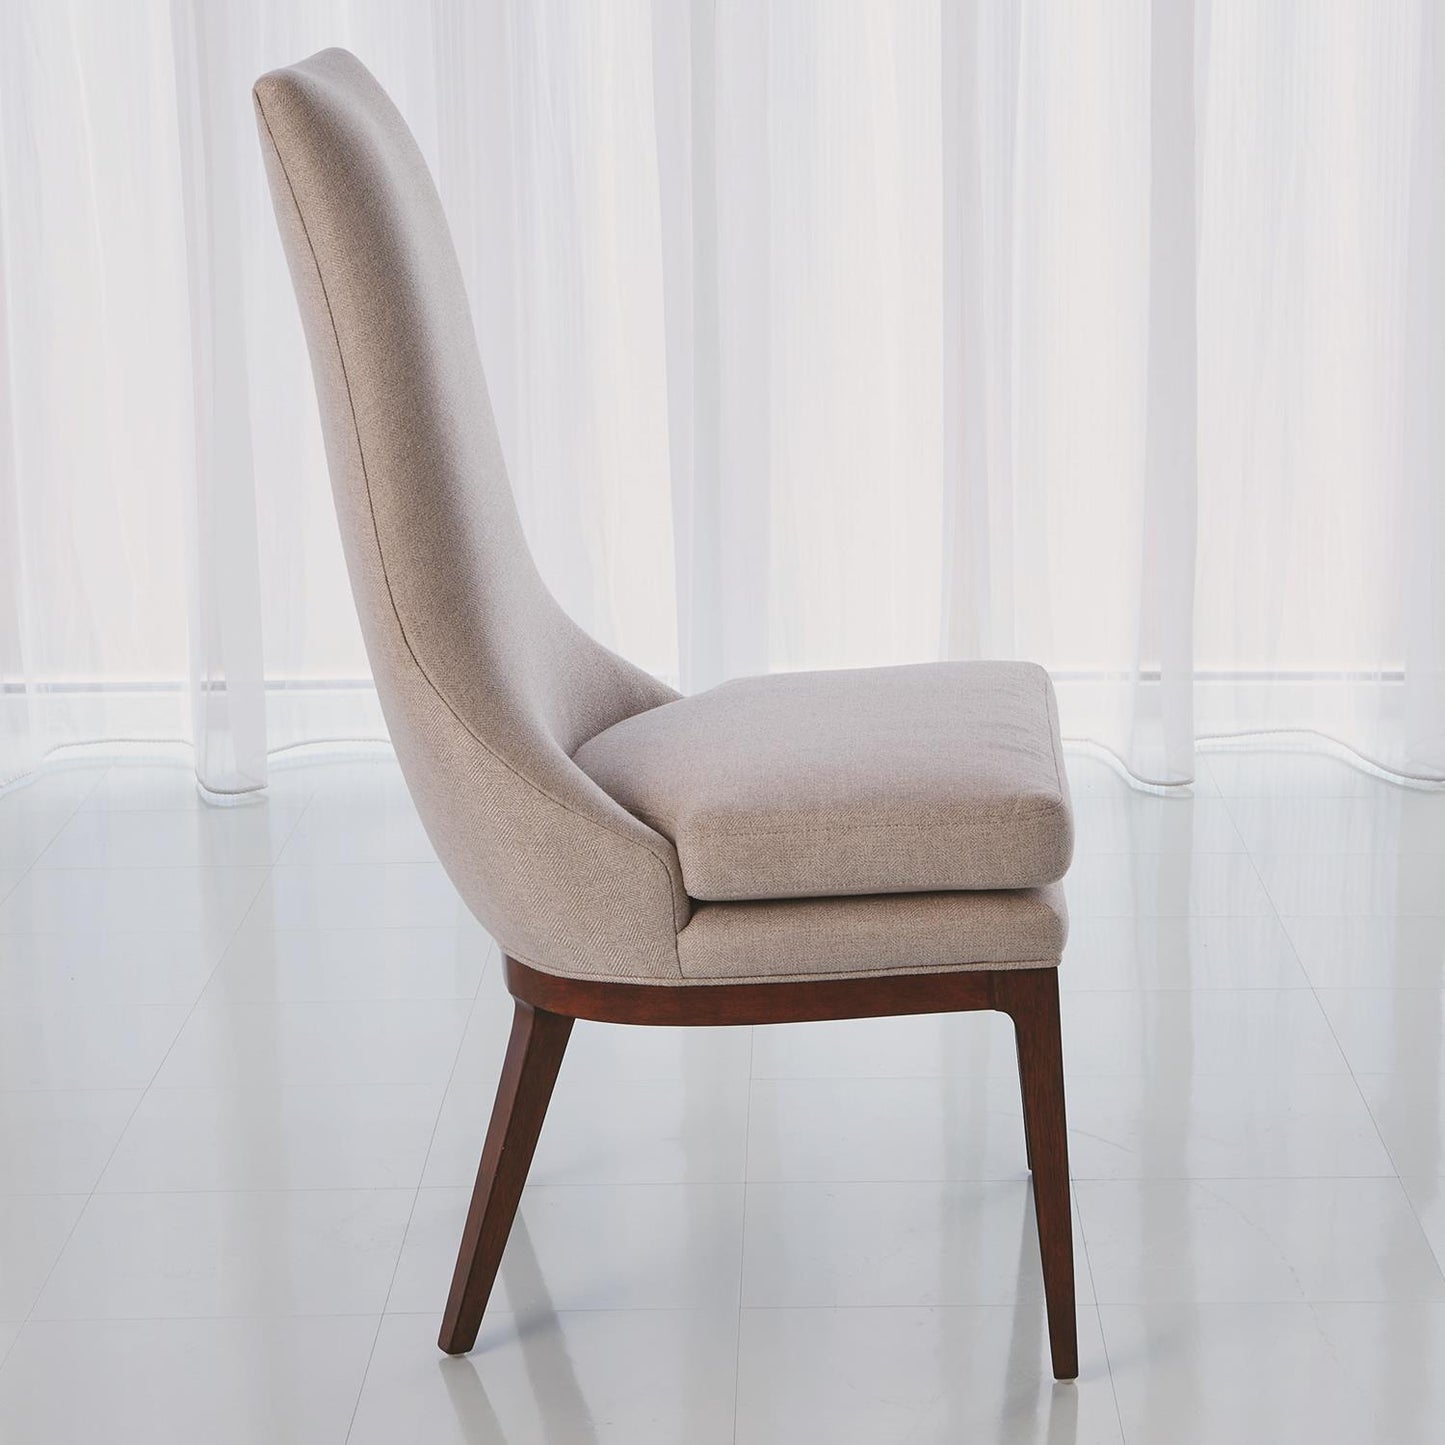 Isabella Dining Chair - Grats Decor Interior Design & Build Inc.